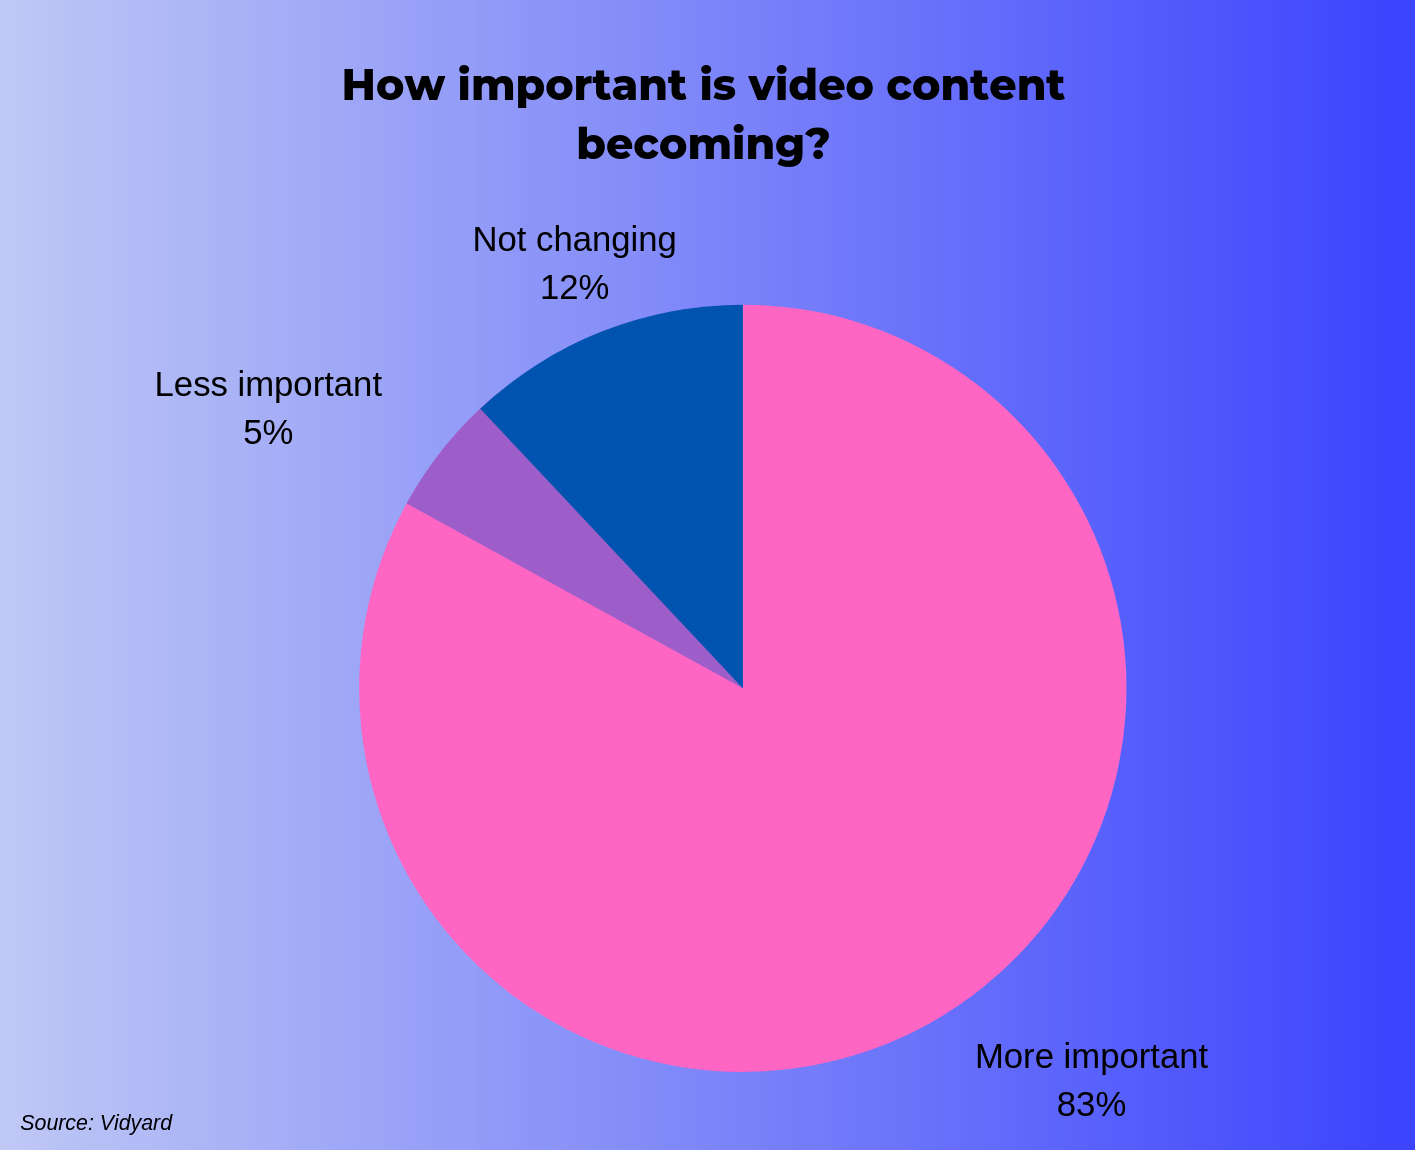 video presentation benefits